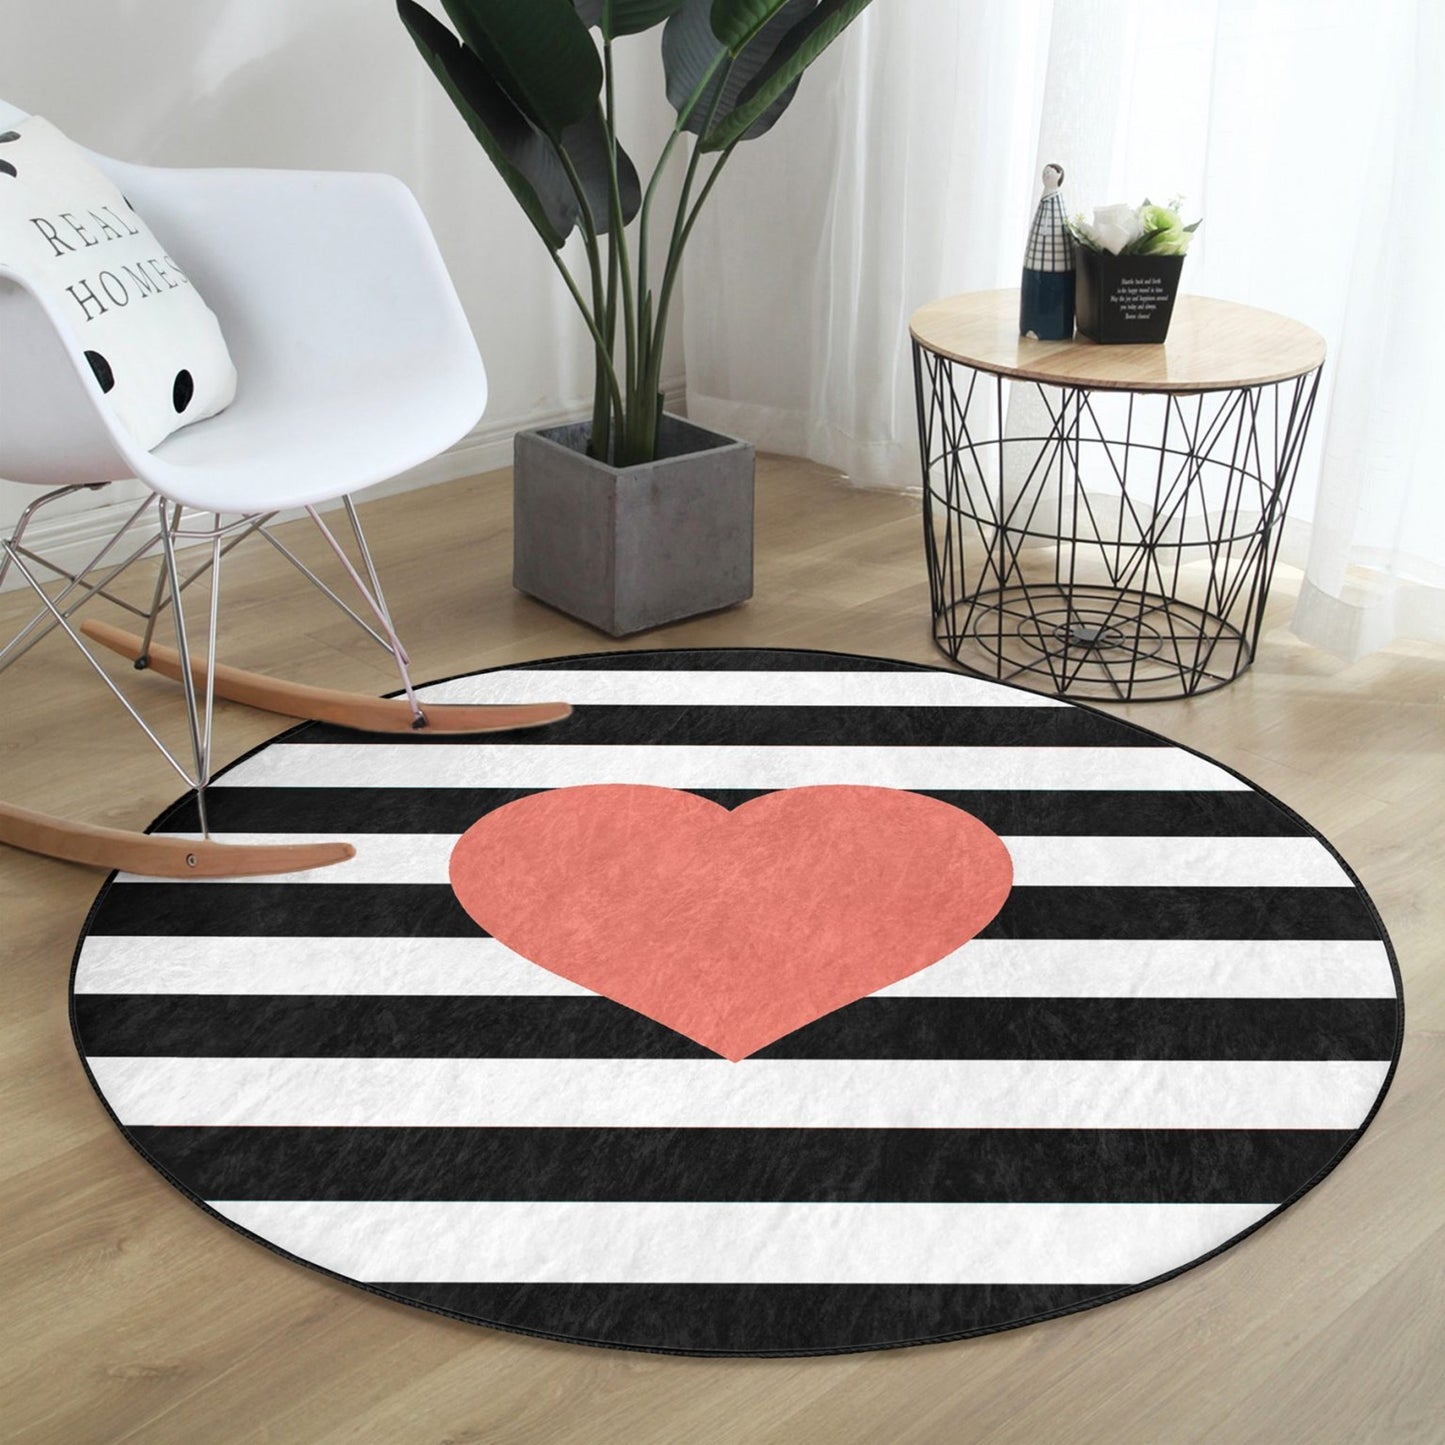 Homeezone Love Pattern Round Rug - Stylish Bedroom Floor Accent